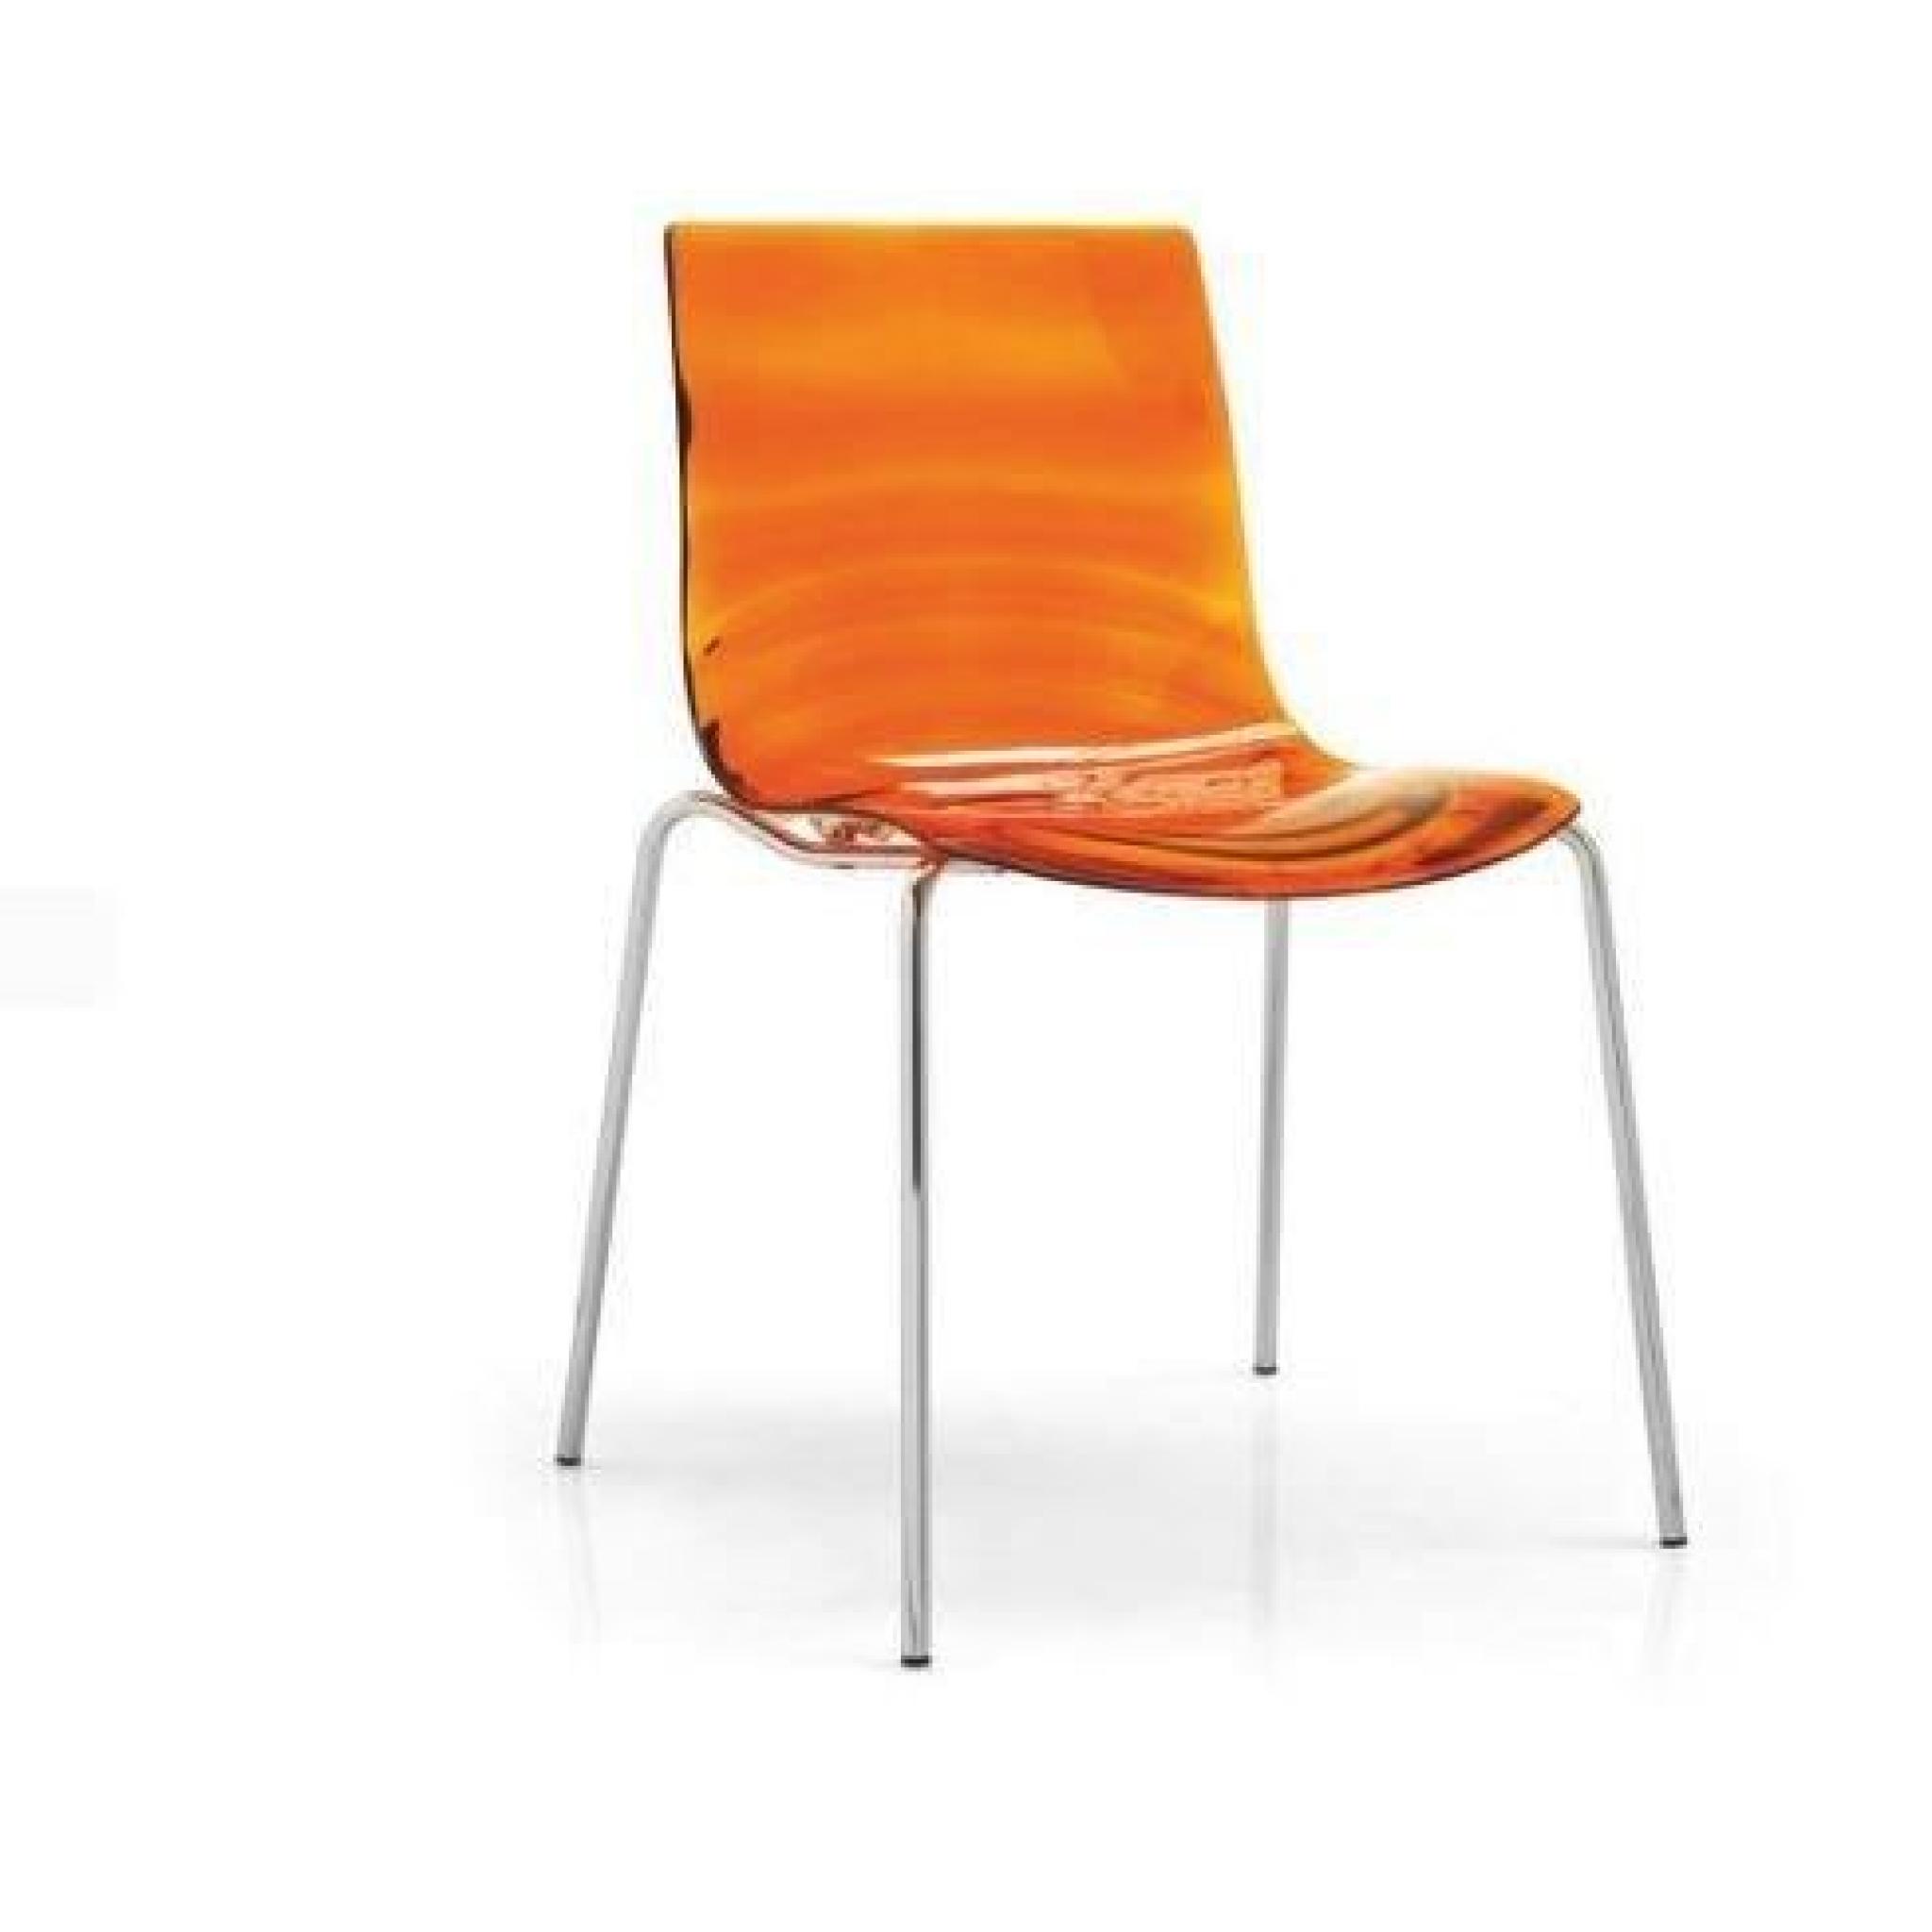 Chaise design l'EAU orange transparente de CALLIGARIS